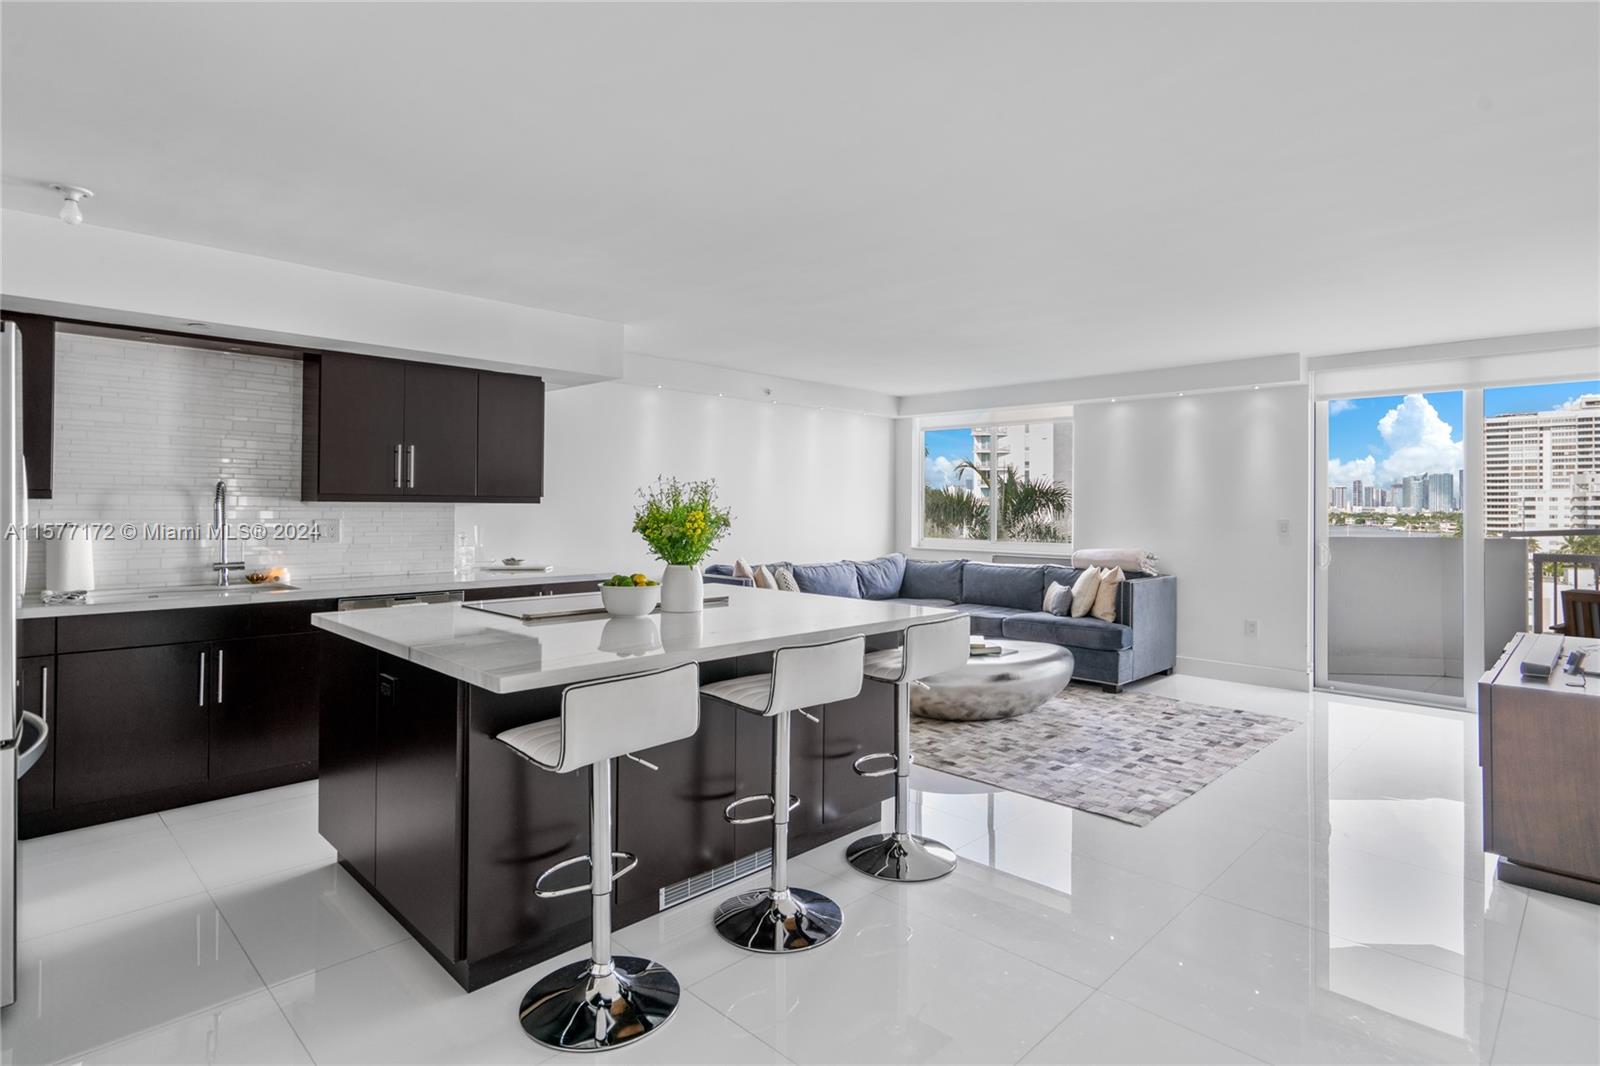 Property for Sale at 1621 Bay Rd Rd 702, Miami Beach, Miami-Dade County, Florida - Bedrooms: 2 
Bathrooms: 2  - $775,000